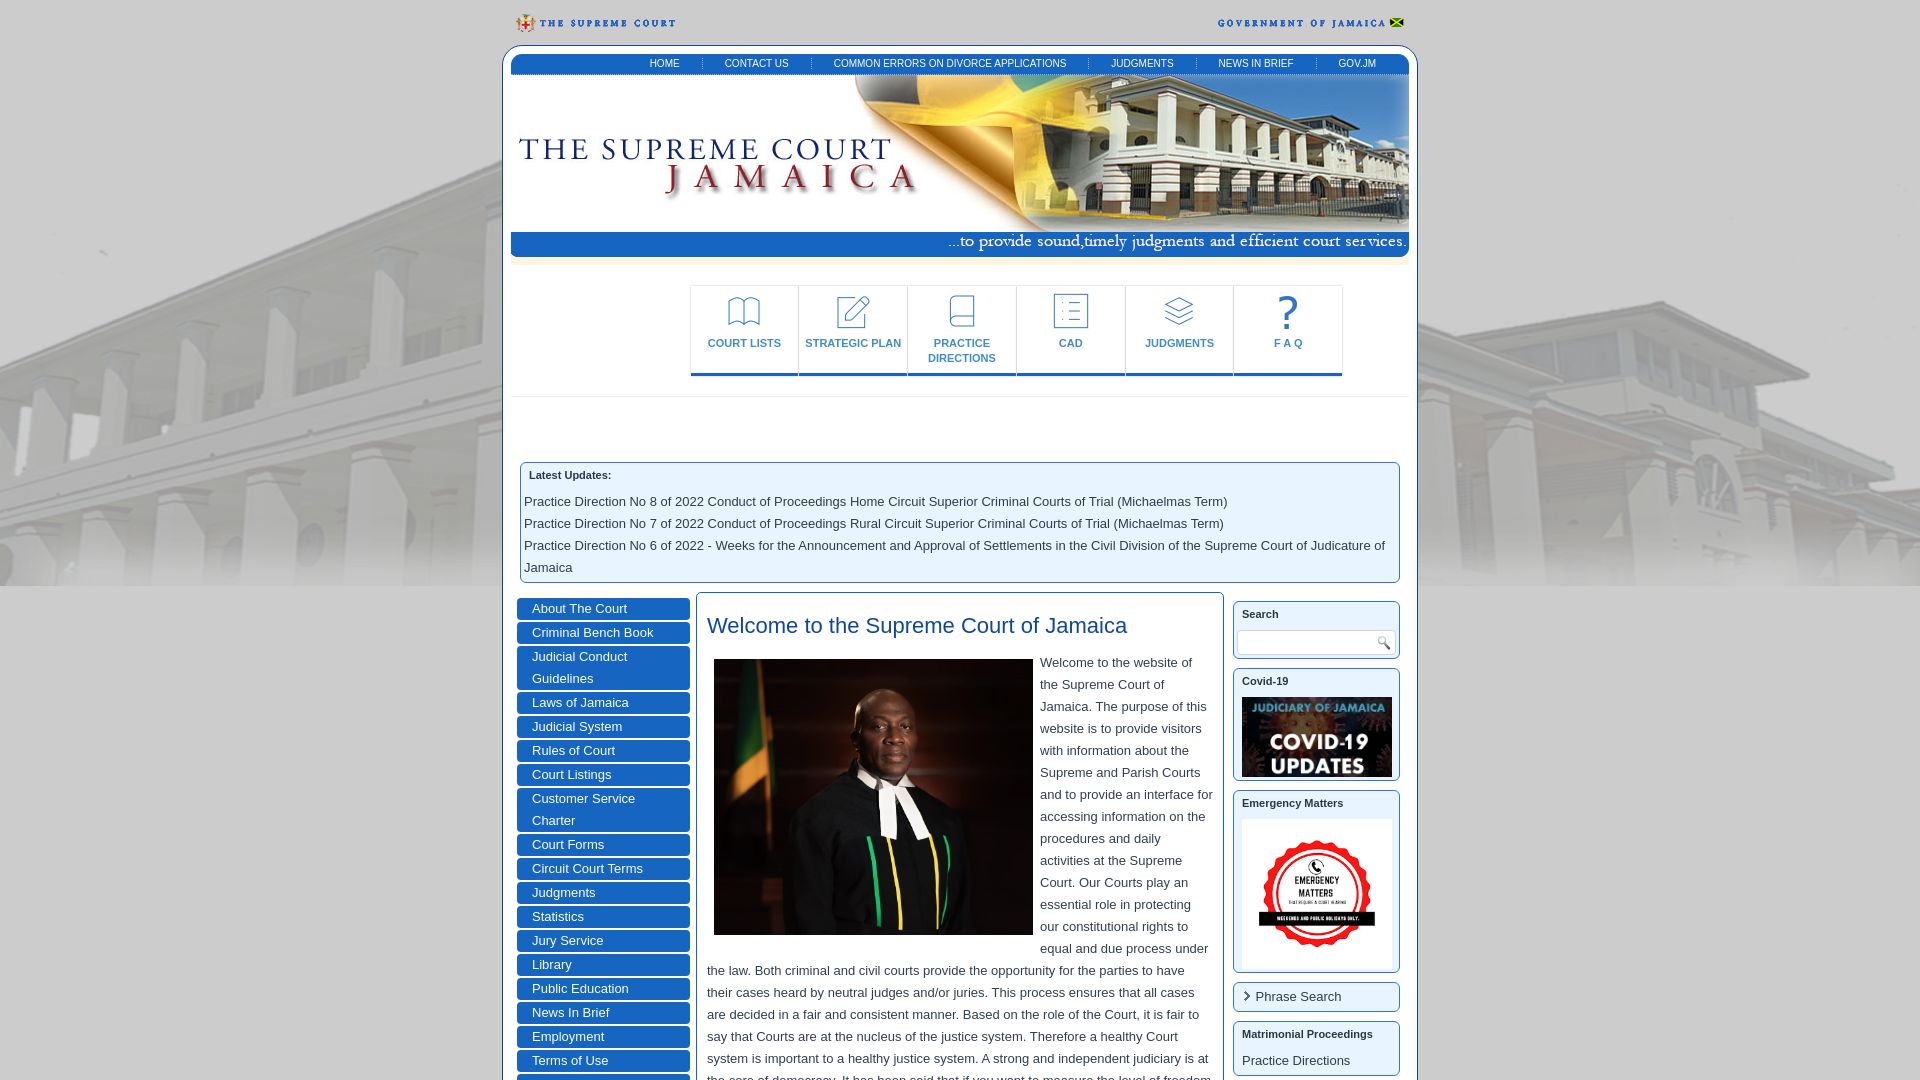 Status do site www.supremecourt.gov.jm está   ONLINE